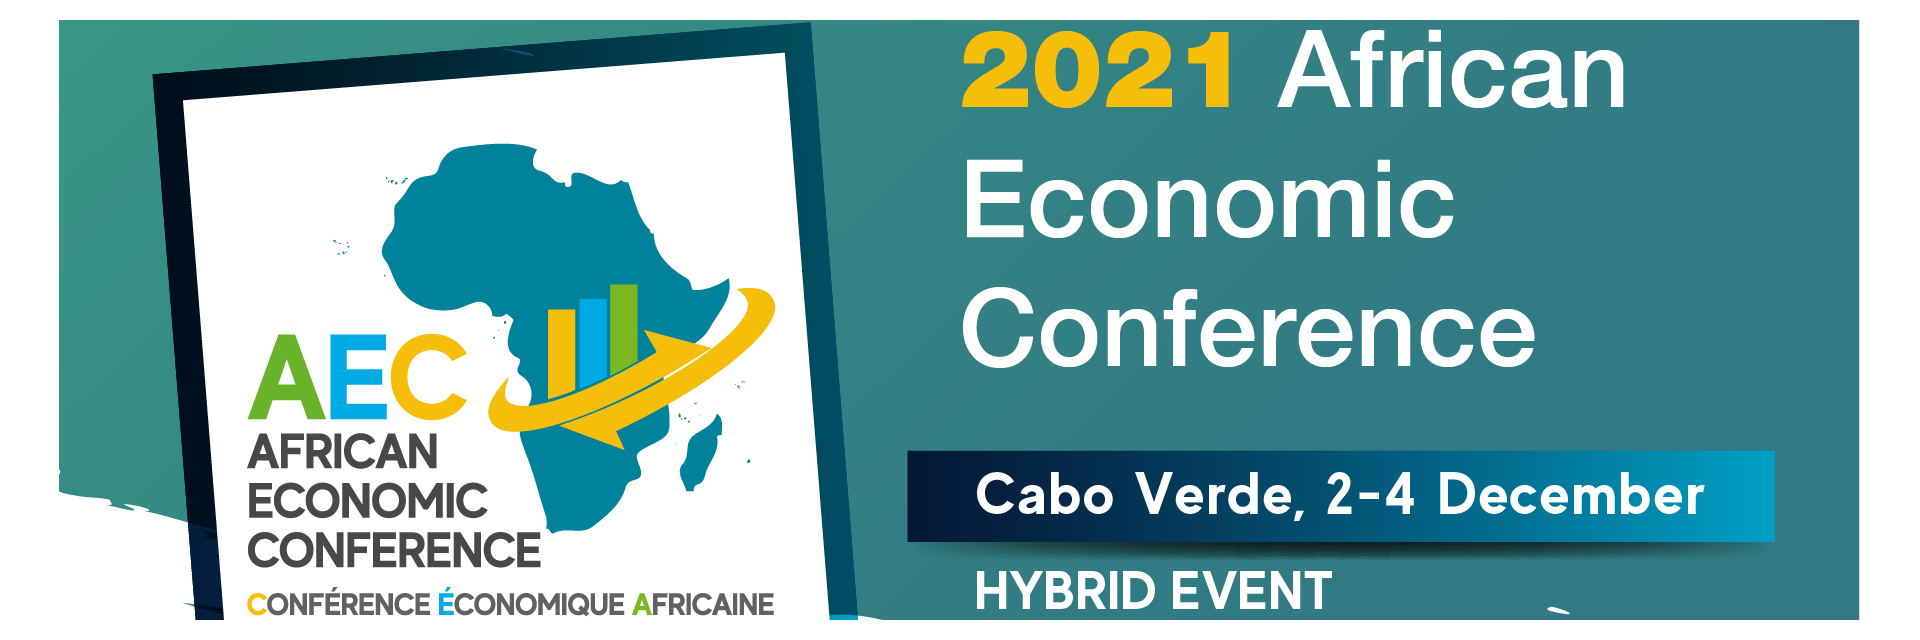 Media Advisory - African Economic Conference 2021